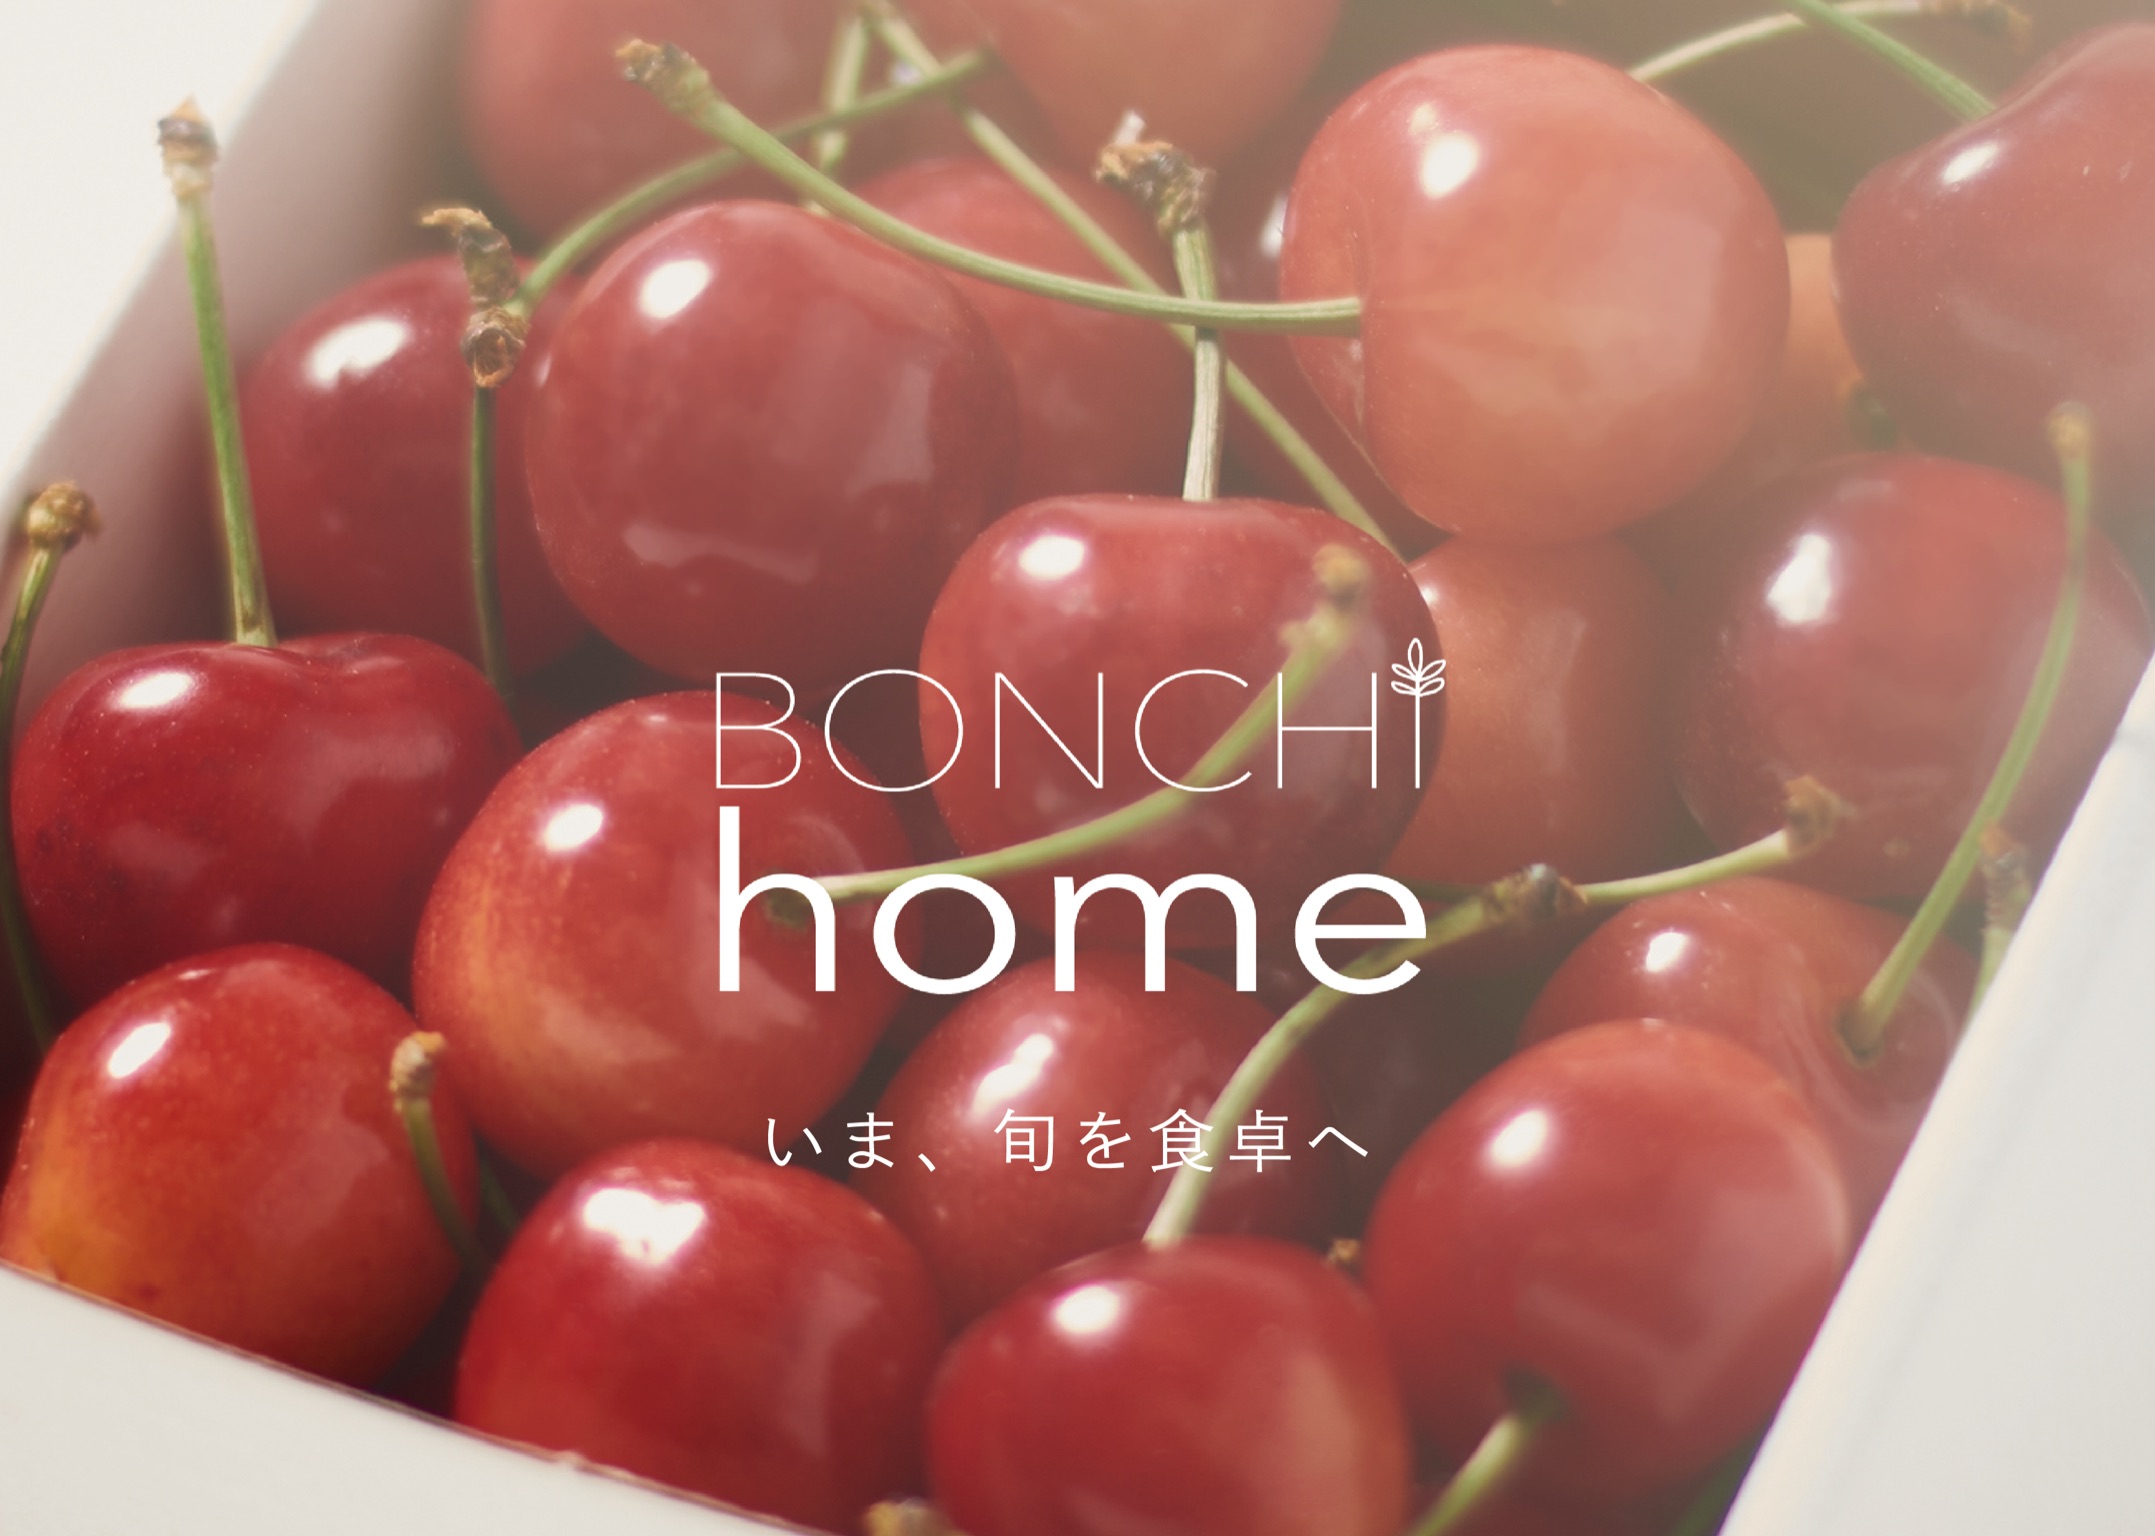 Bonchi home